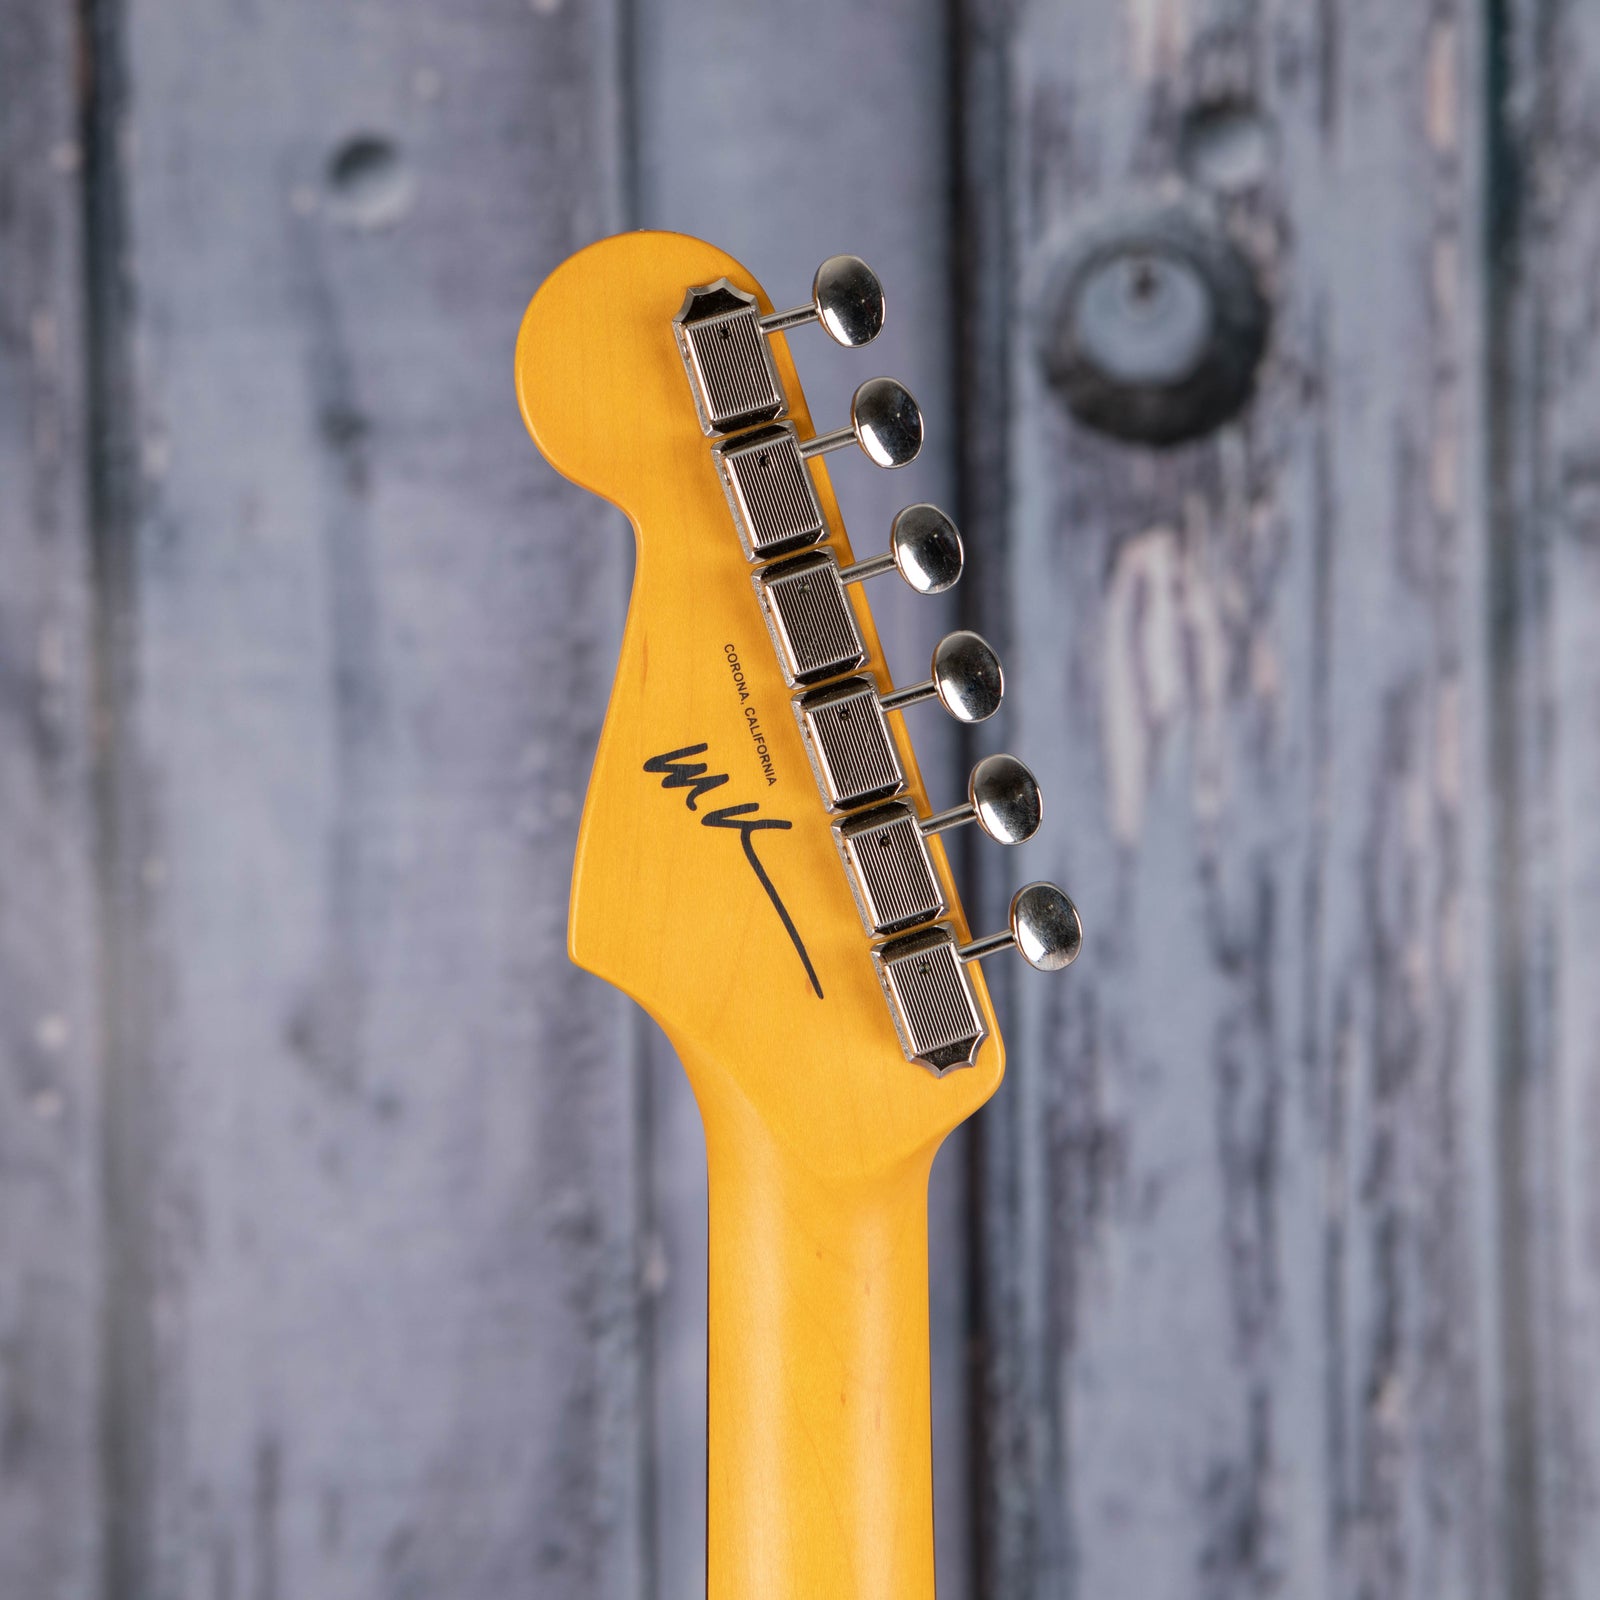 Fender Stories Collection Michael Landau Coma Stratocaster, Coma